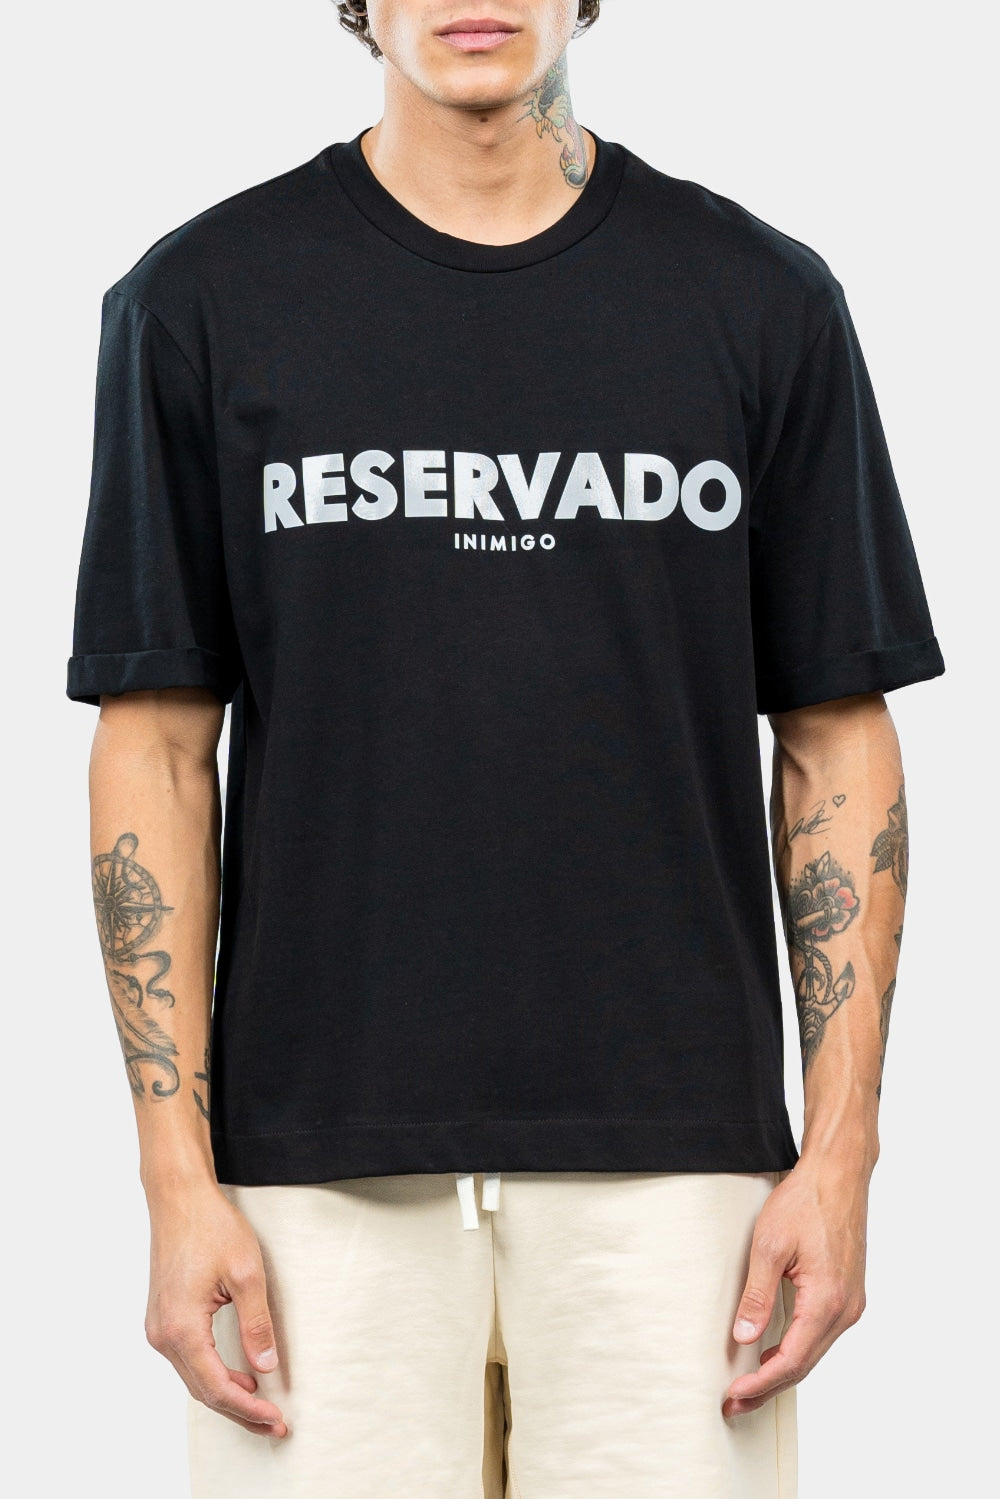 T-shirt oversize réservé